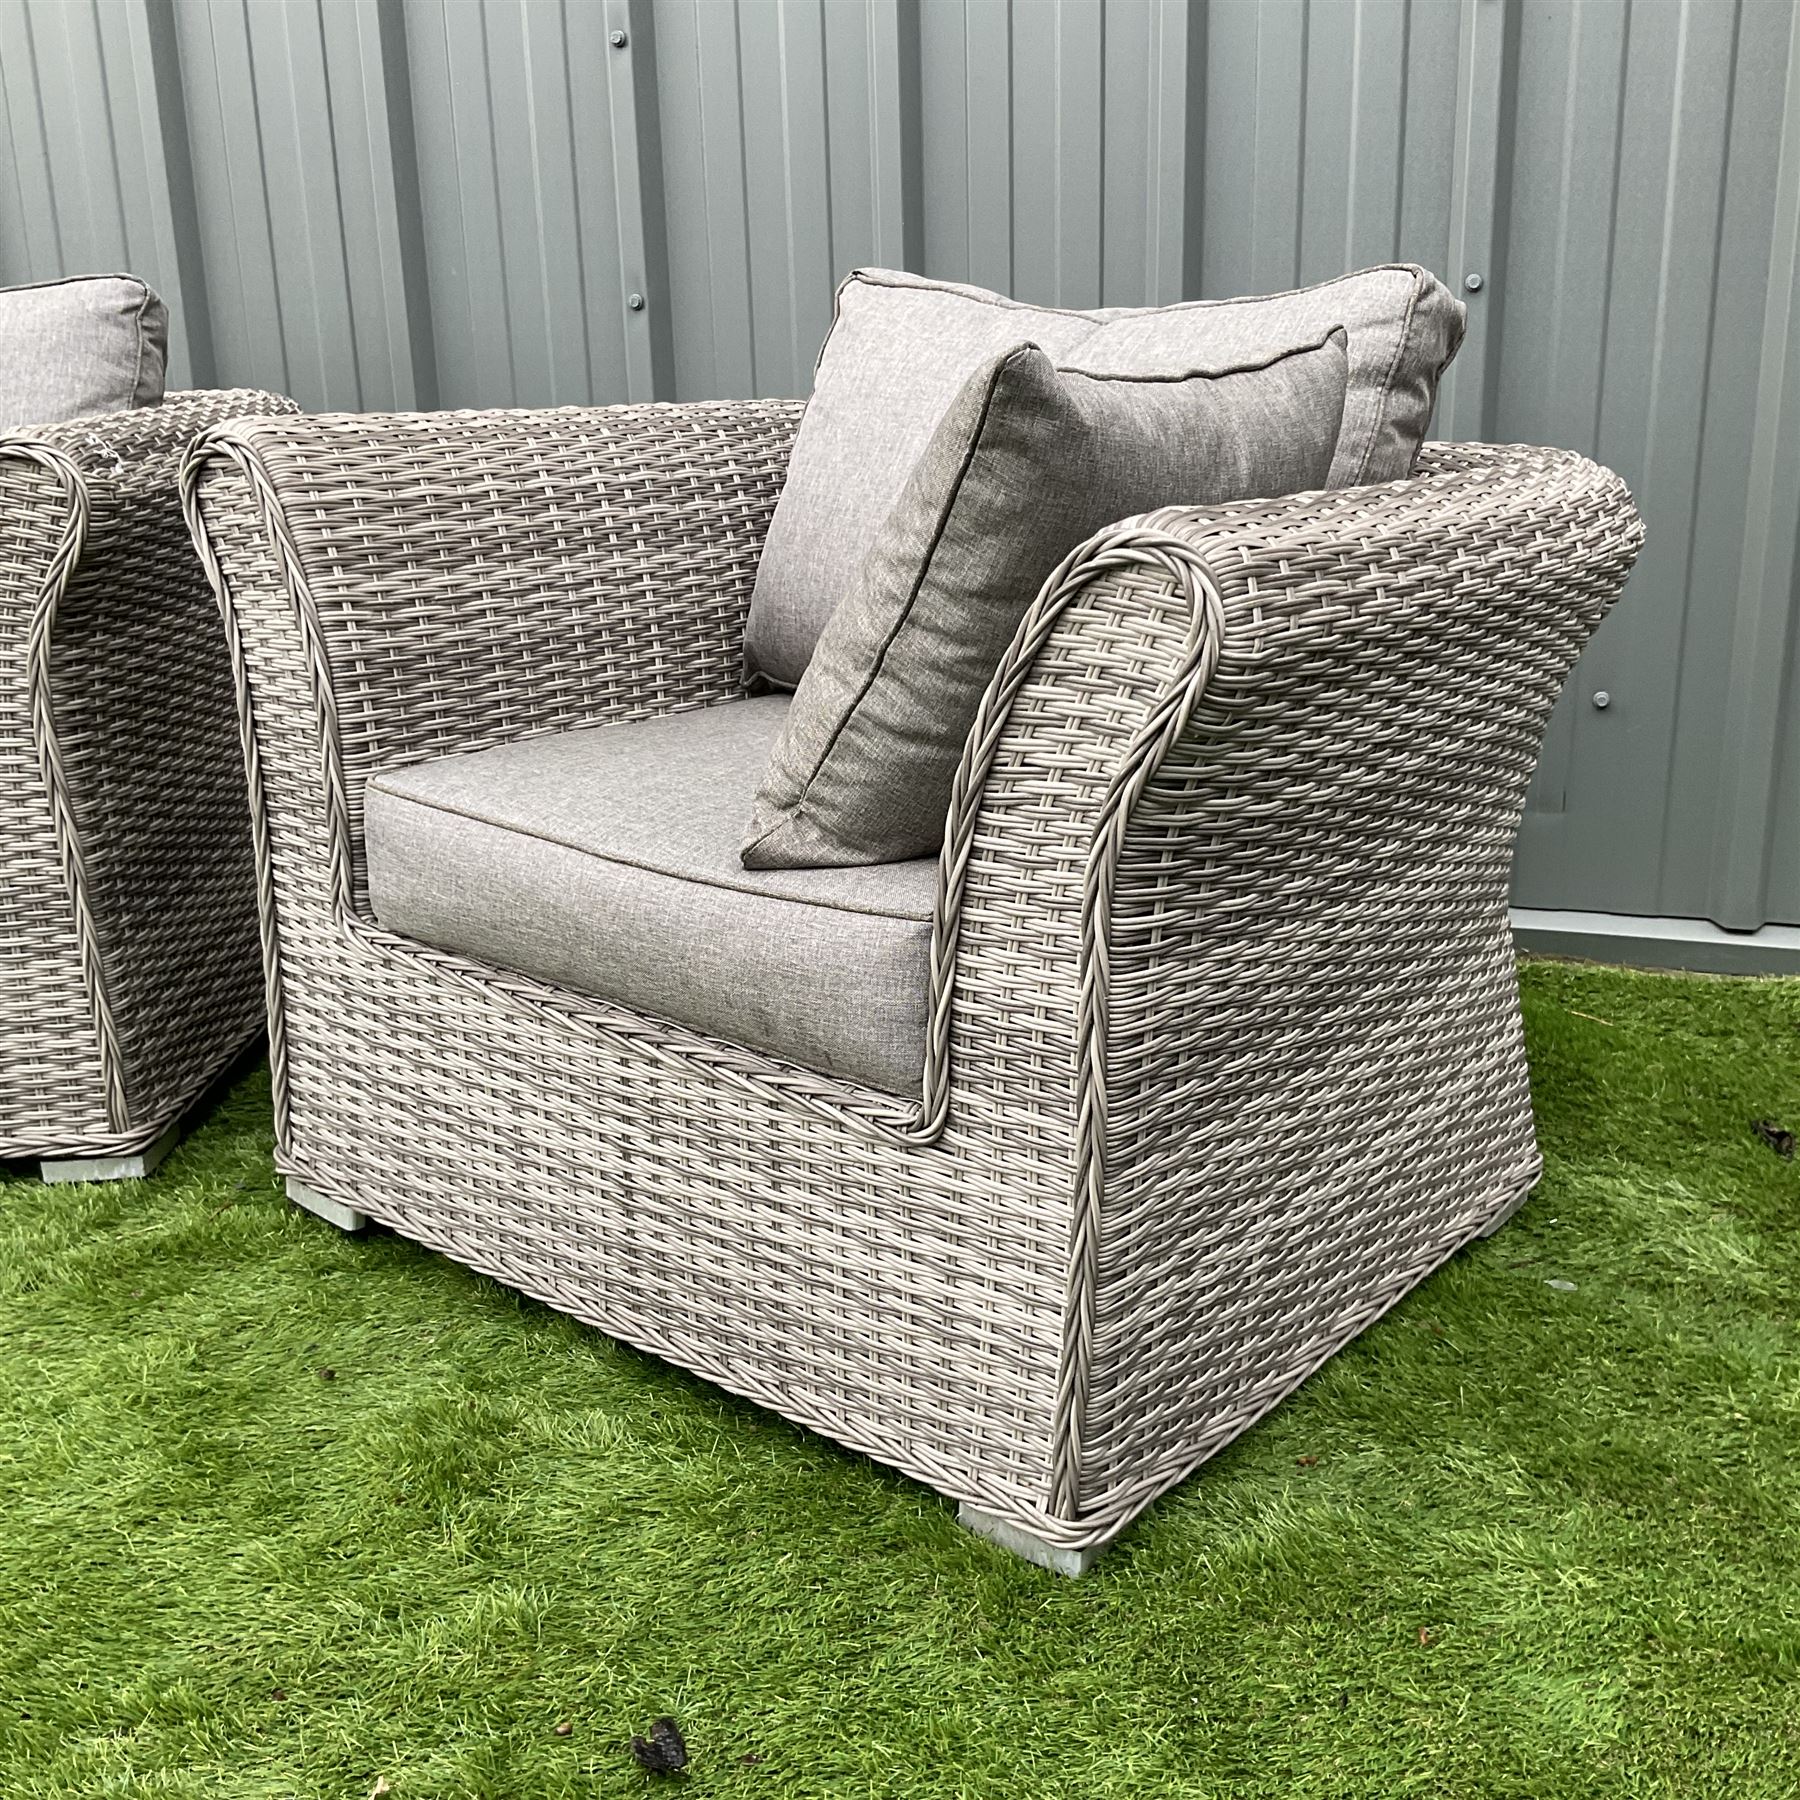 RattanDirect - pair of rattan garden armchairs - Image 2 of 6